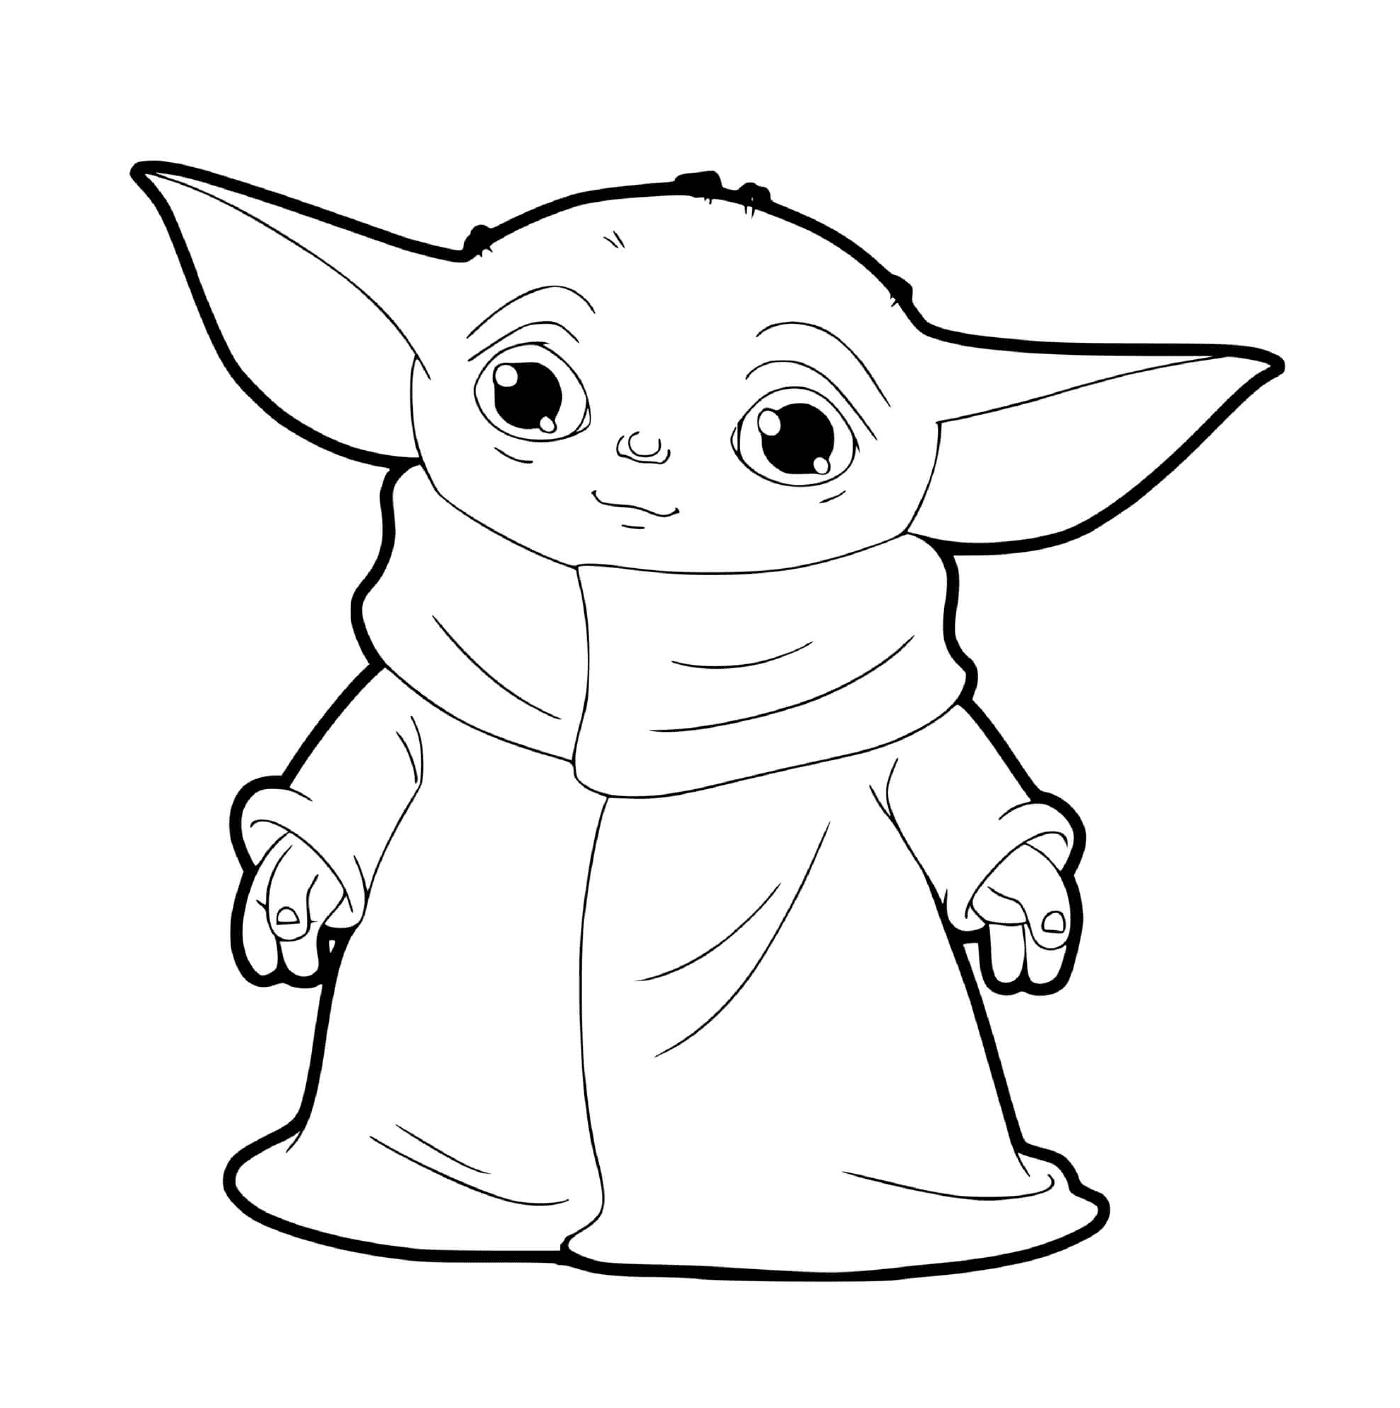  Baby Yoda from Mandalorian 